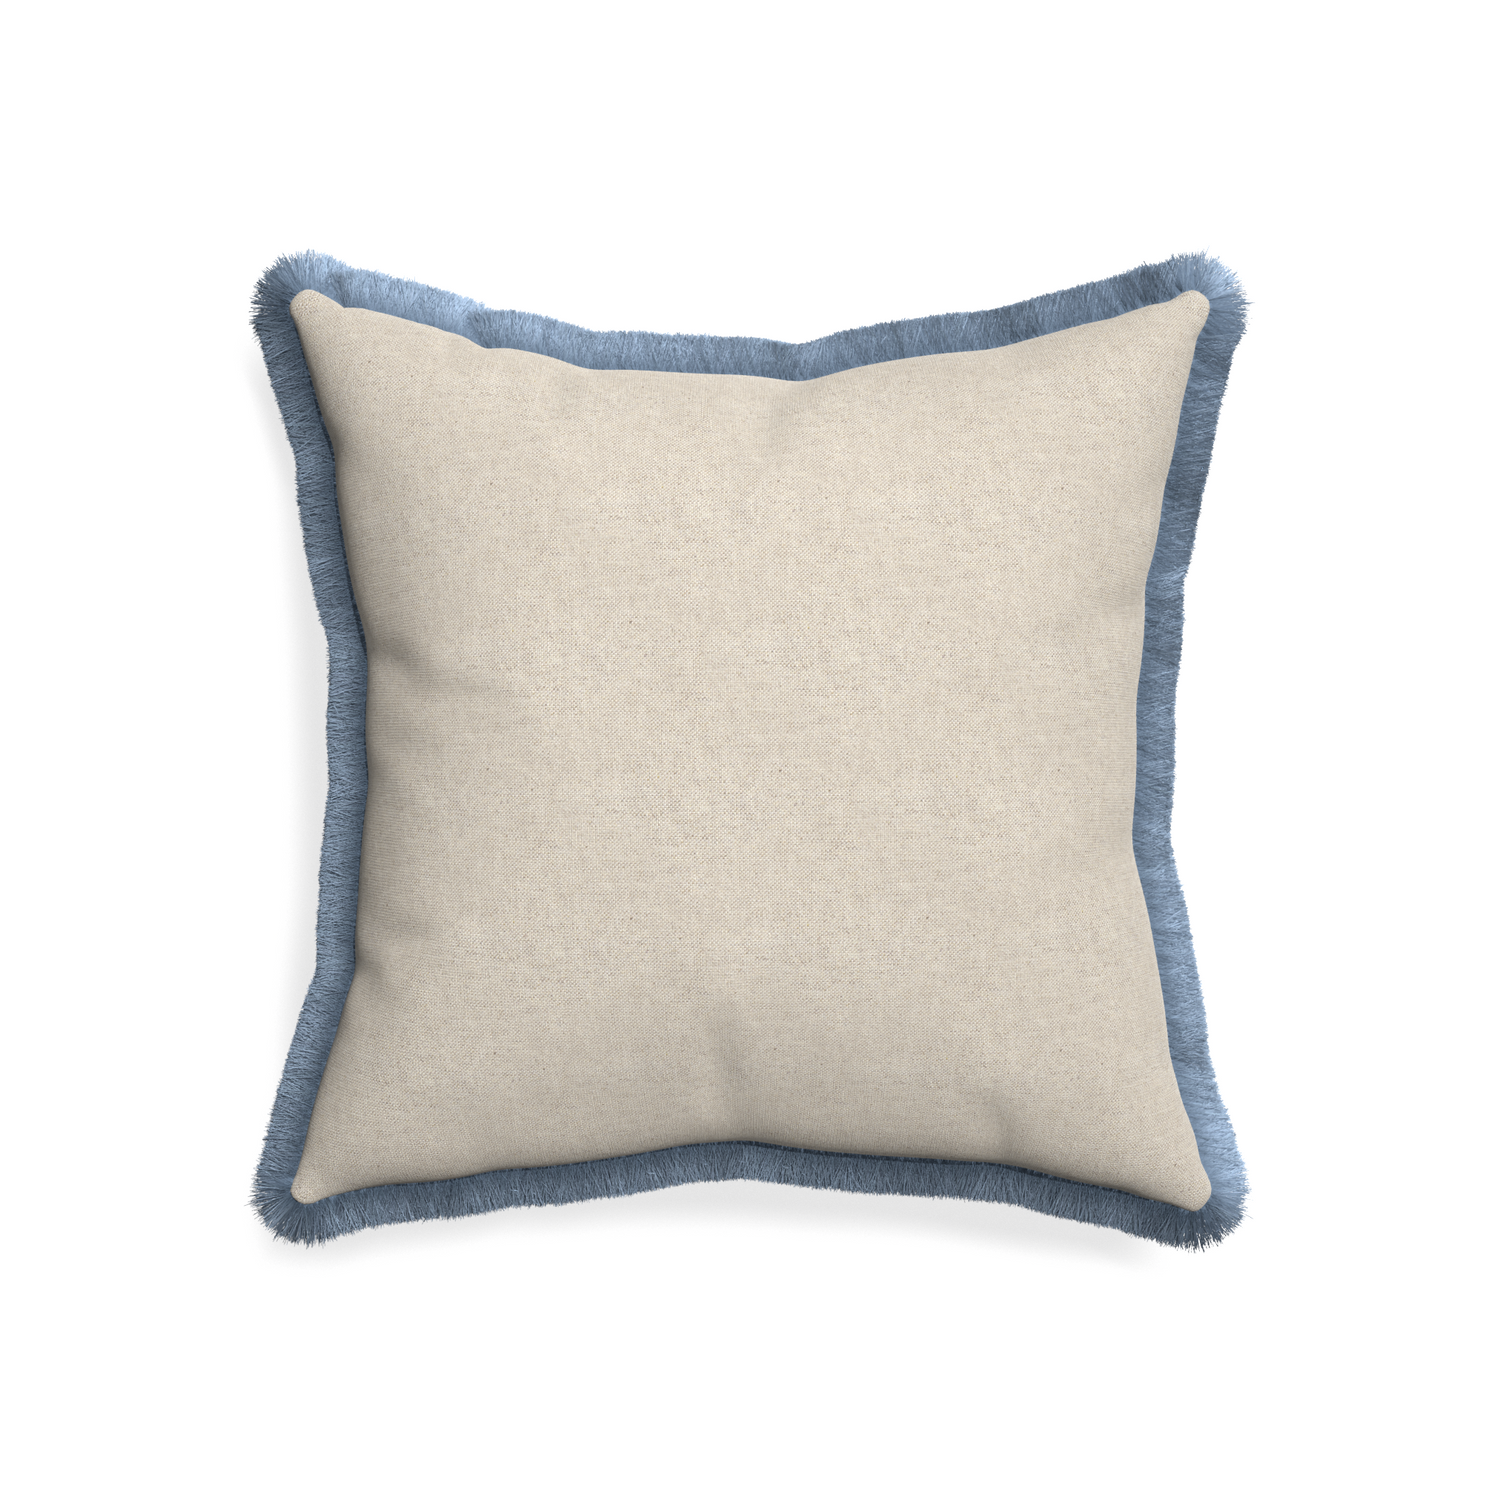 20-square oat custom pillow with sky fringe on white background